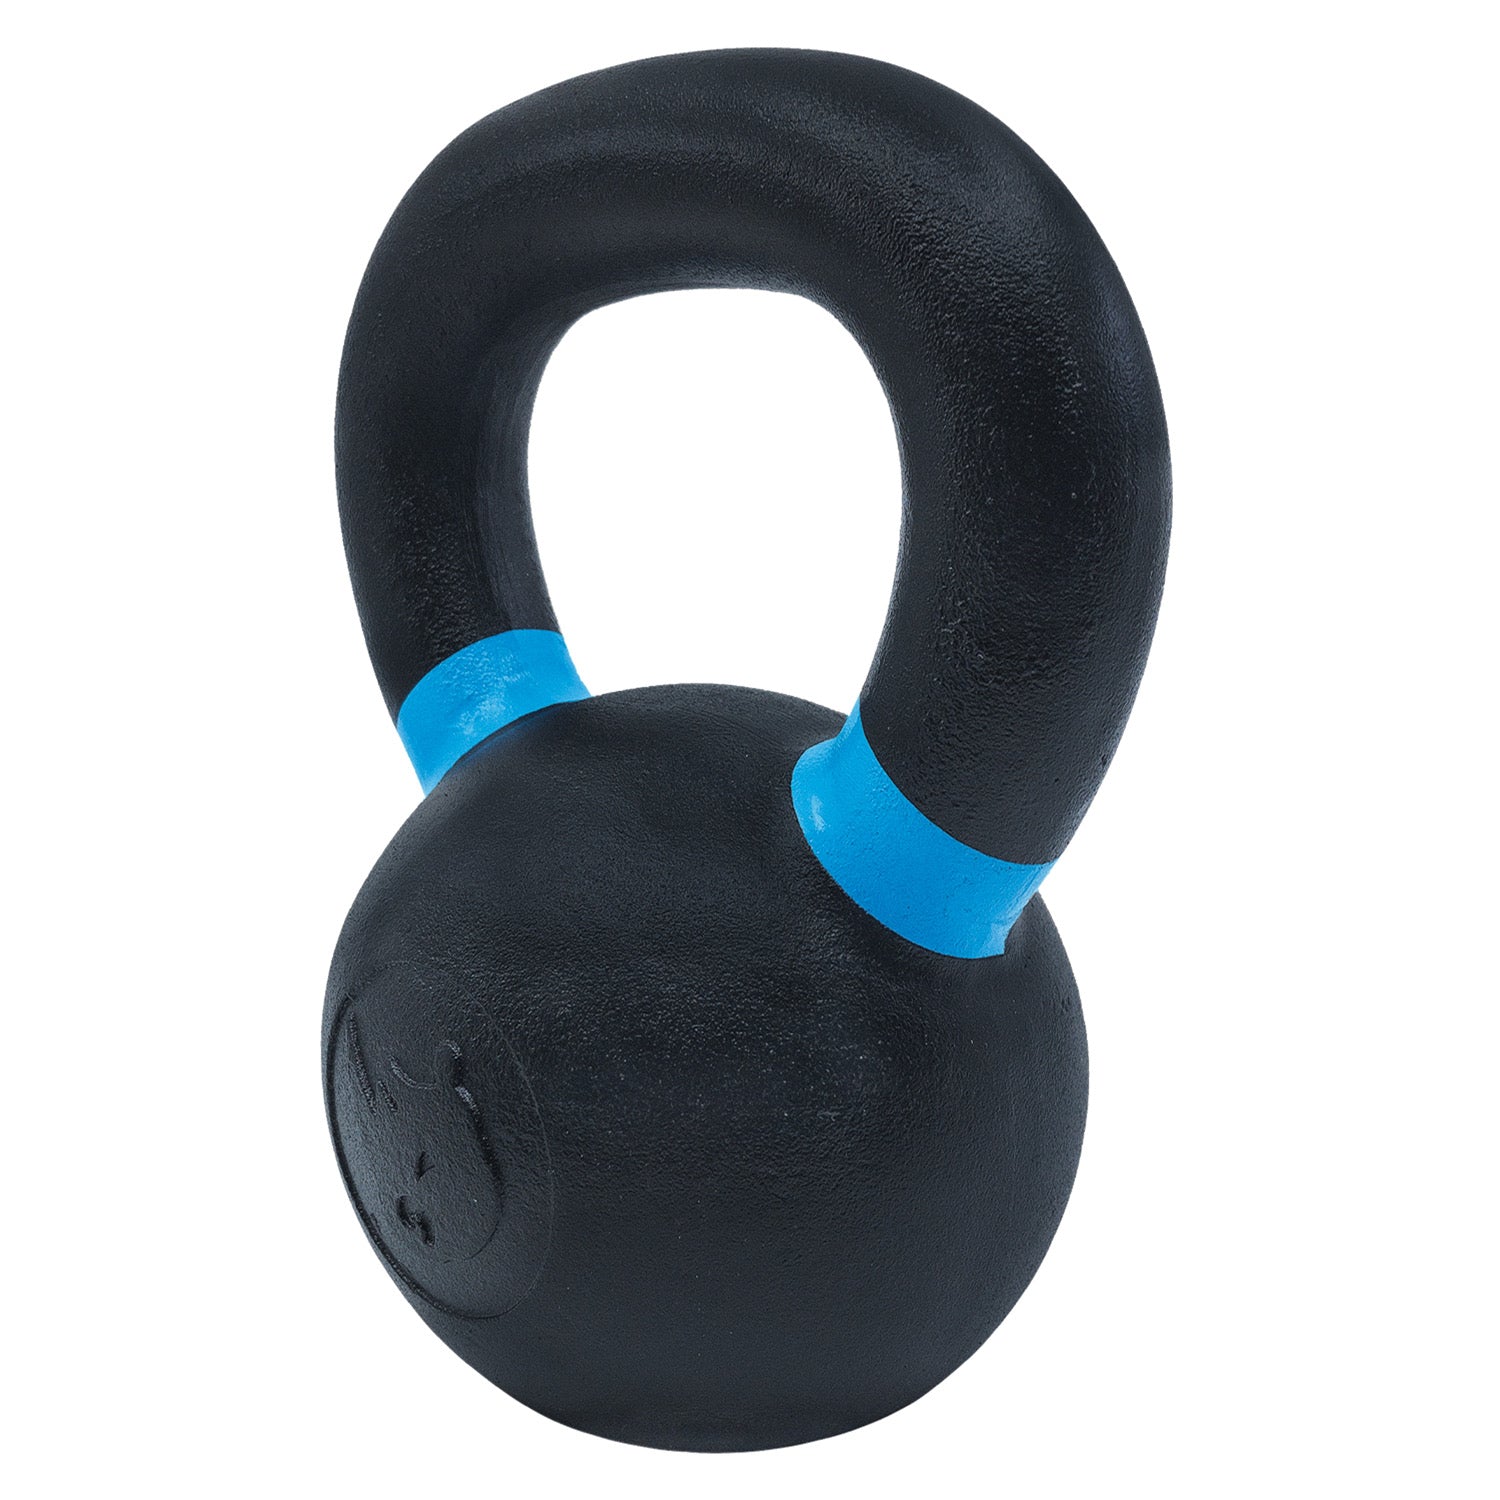 RHINO Fitness® Iron Kettlebell Series 15 lb RHINO Fitness fitness kettlebell Resistance Training